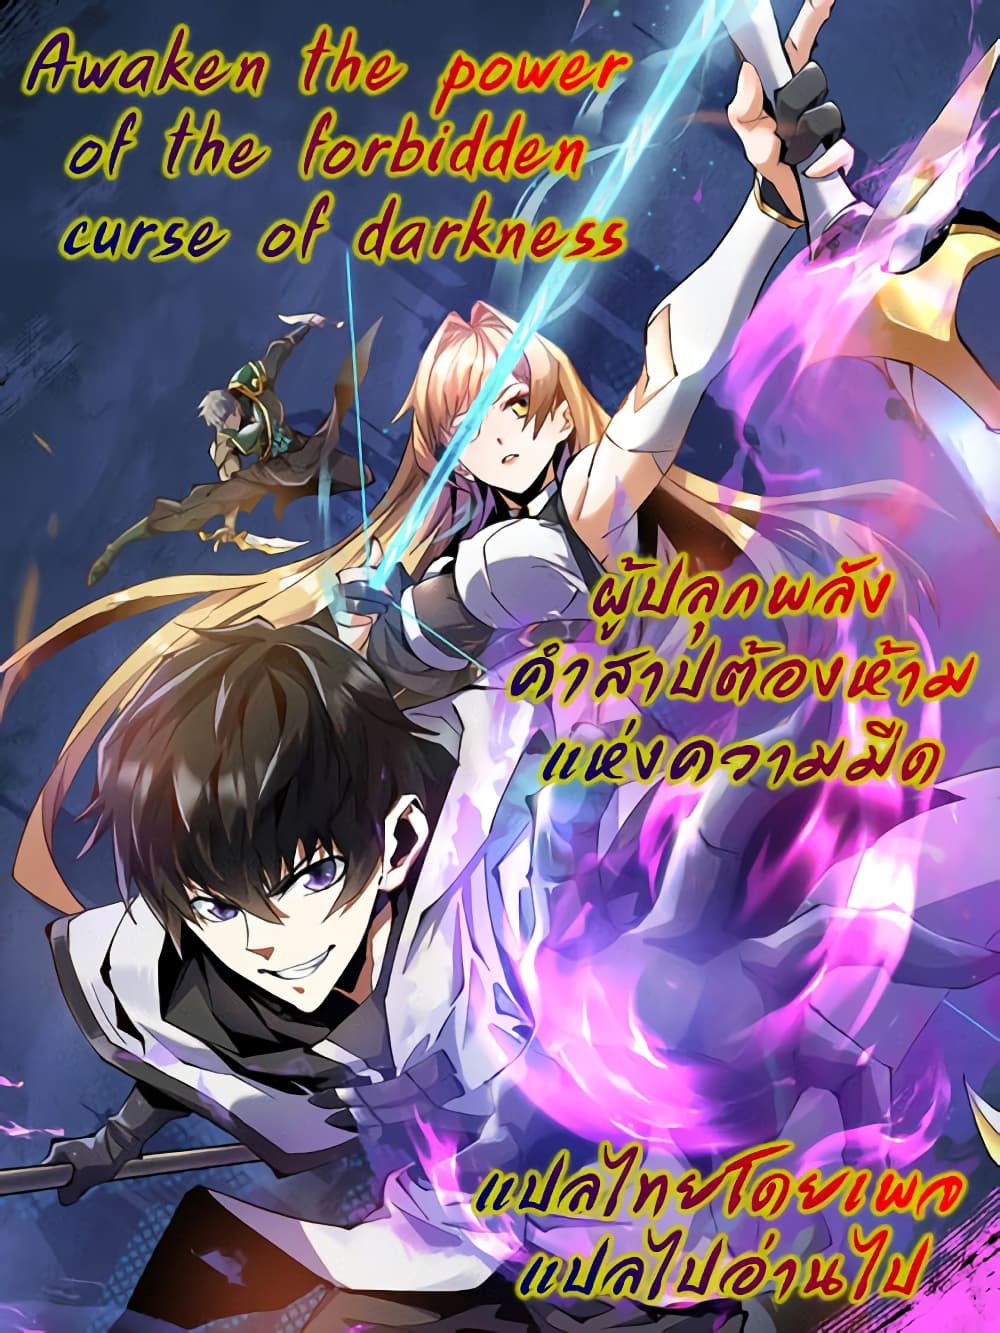 Awaken the power of the forbidden curse of darkness 2-2